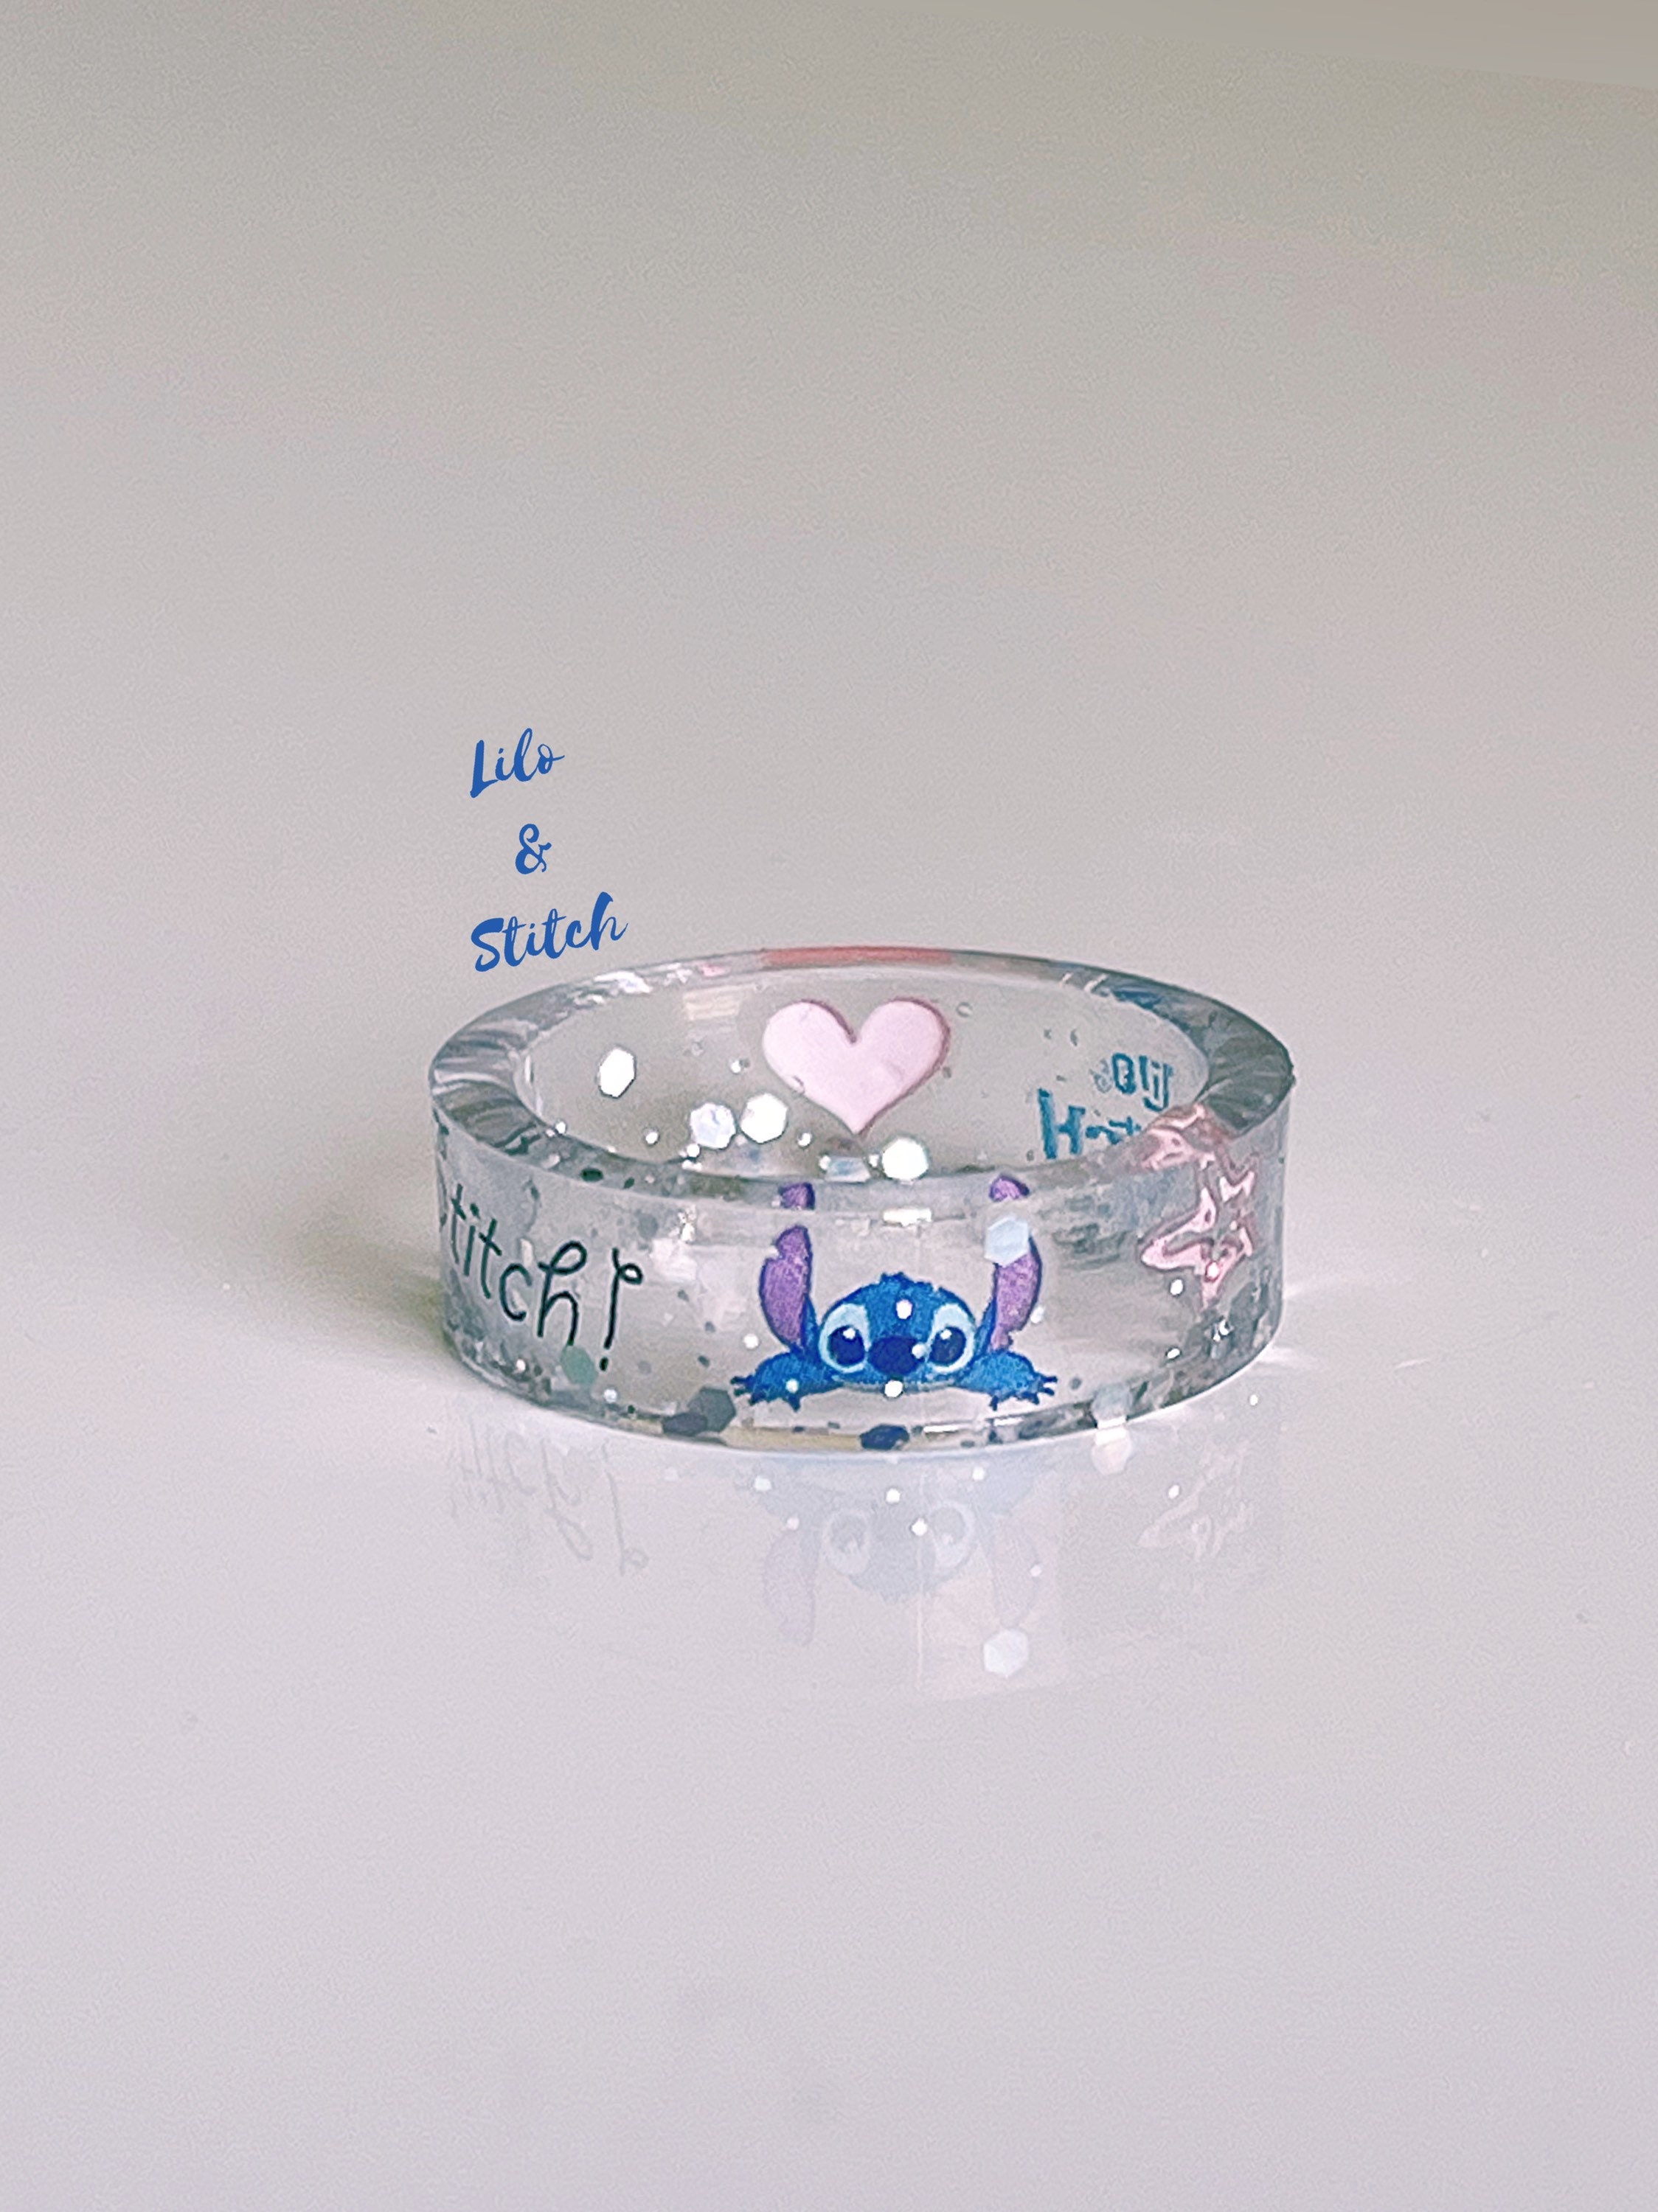 Stitch custom made figure as engagement ring box. — Steemit